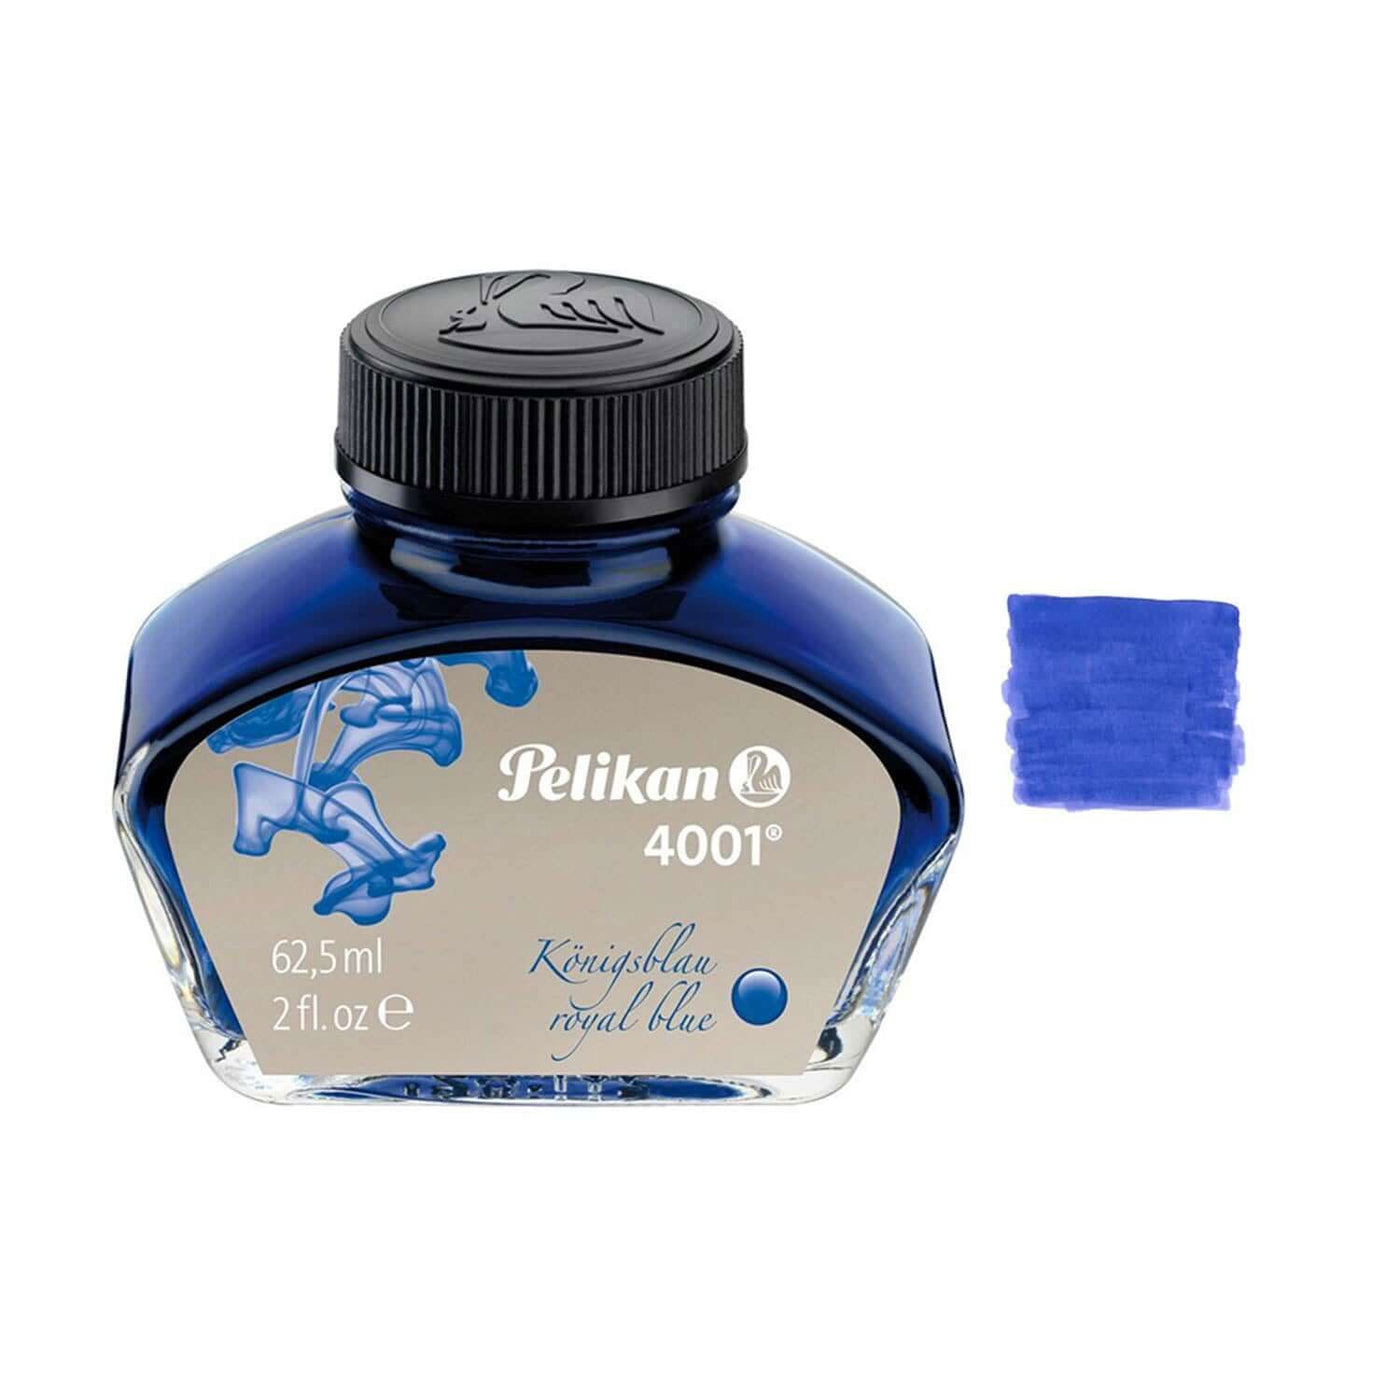 Pelikan 4001 Ink Royal Blue - 62.5ml 2